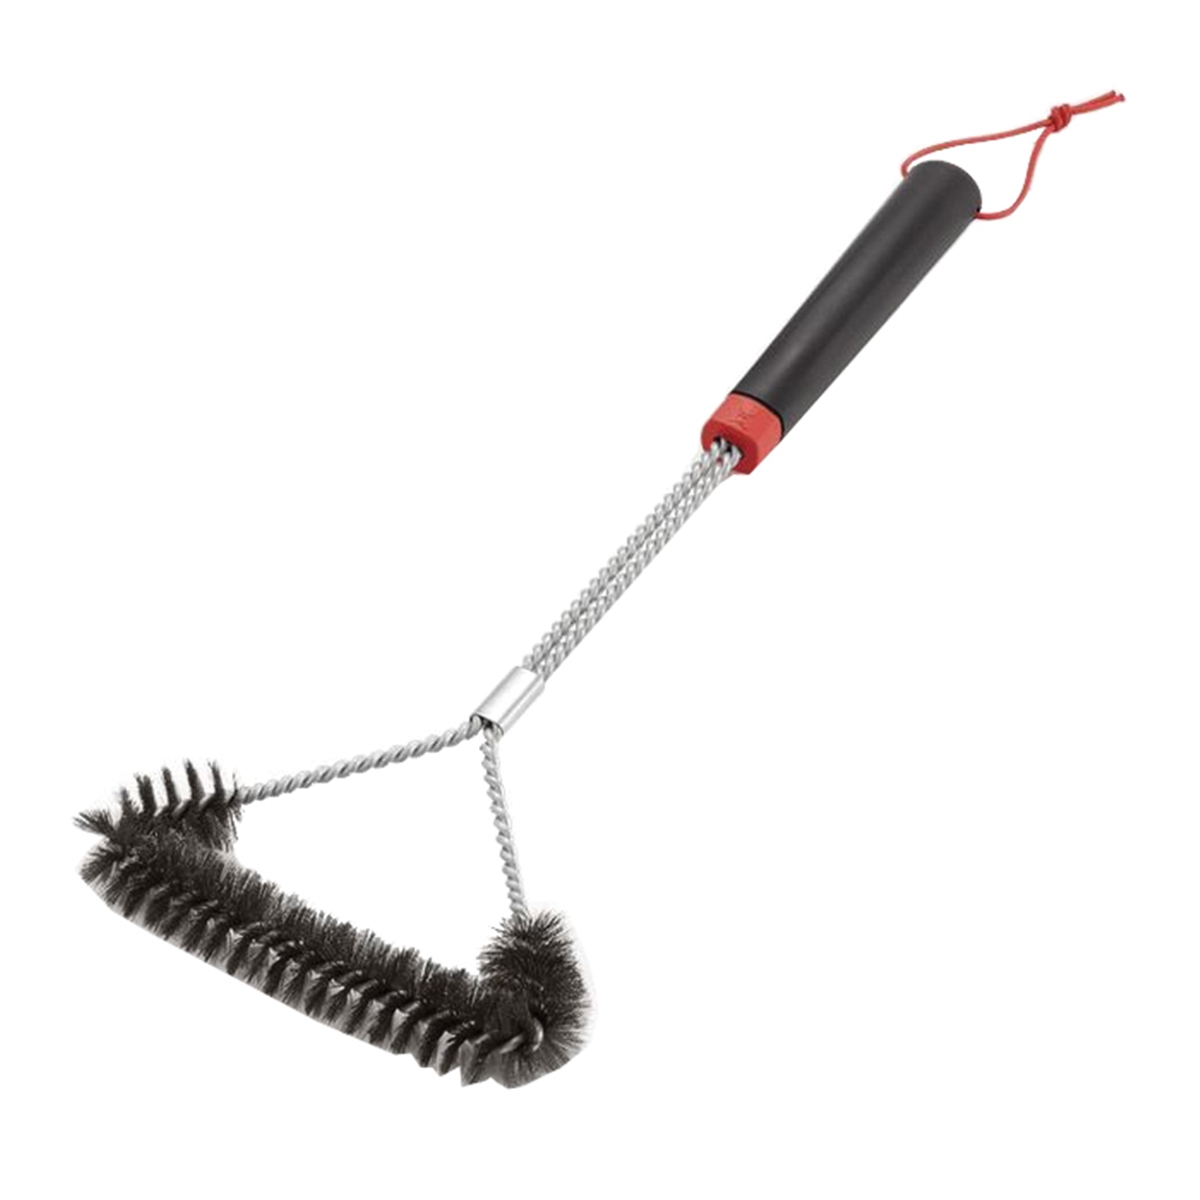 6278 Grill Brush, 7 in W Brush, Stainless Steel Bristle, Black Bristle, Plastic Handle, Comfort Grip Handle